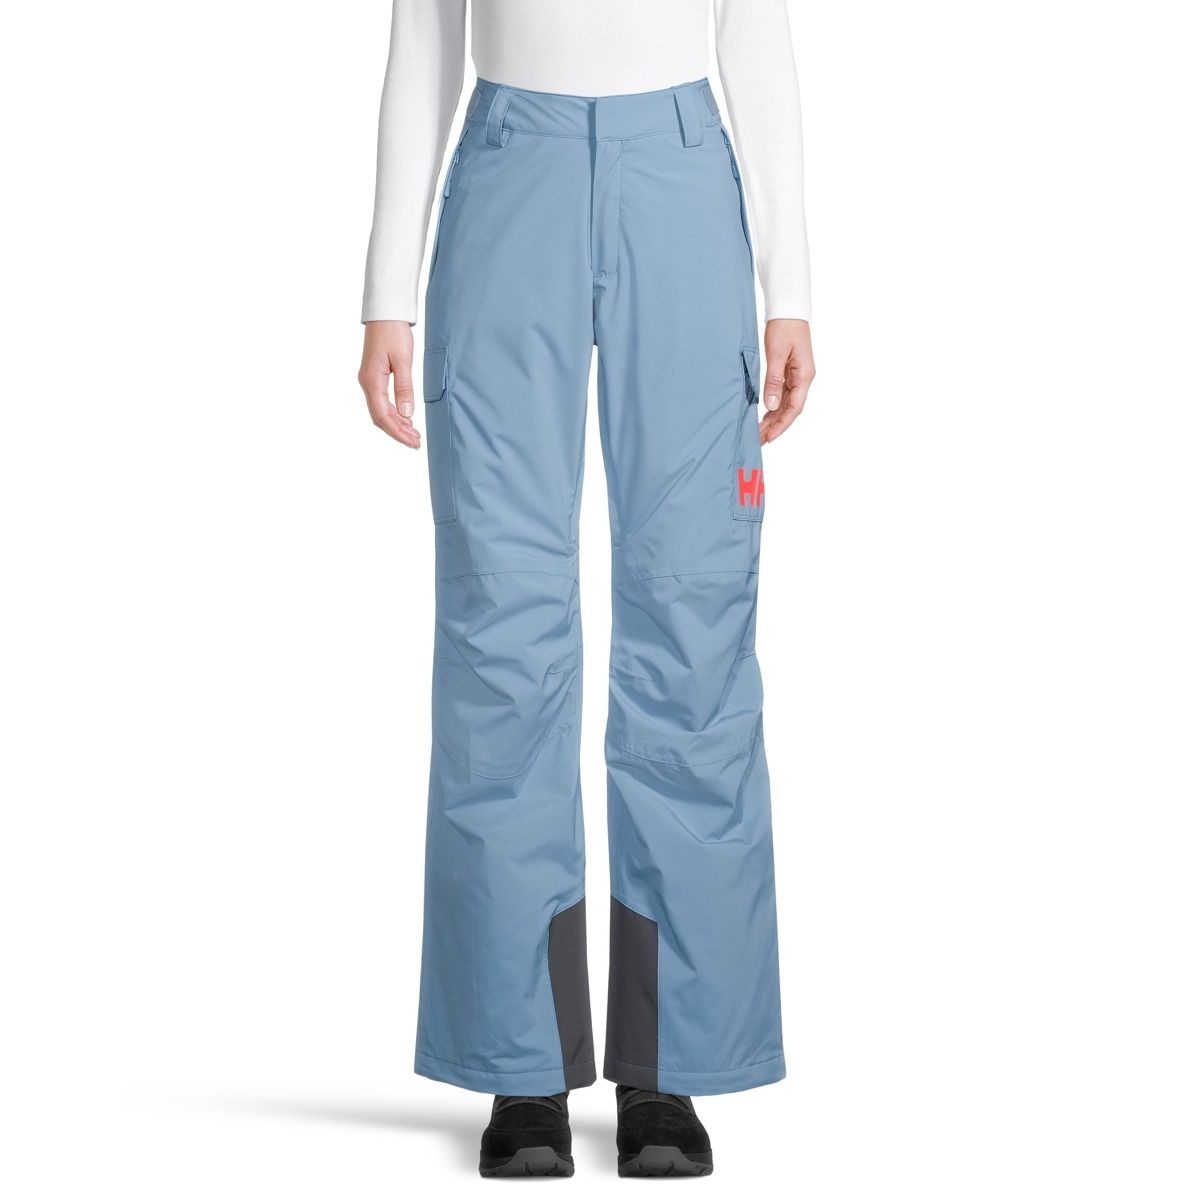 Helly Hansen Women's Switch Cargo Snow Pants, Insulated, Ski